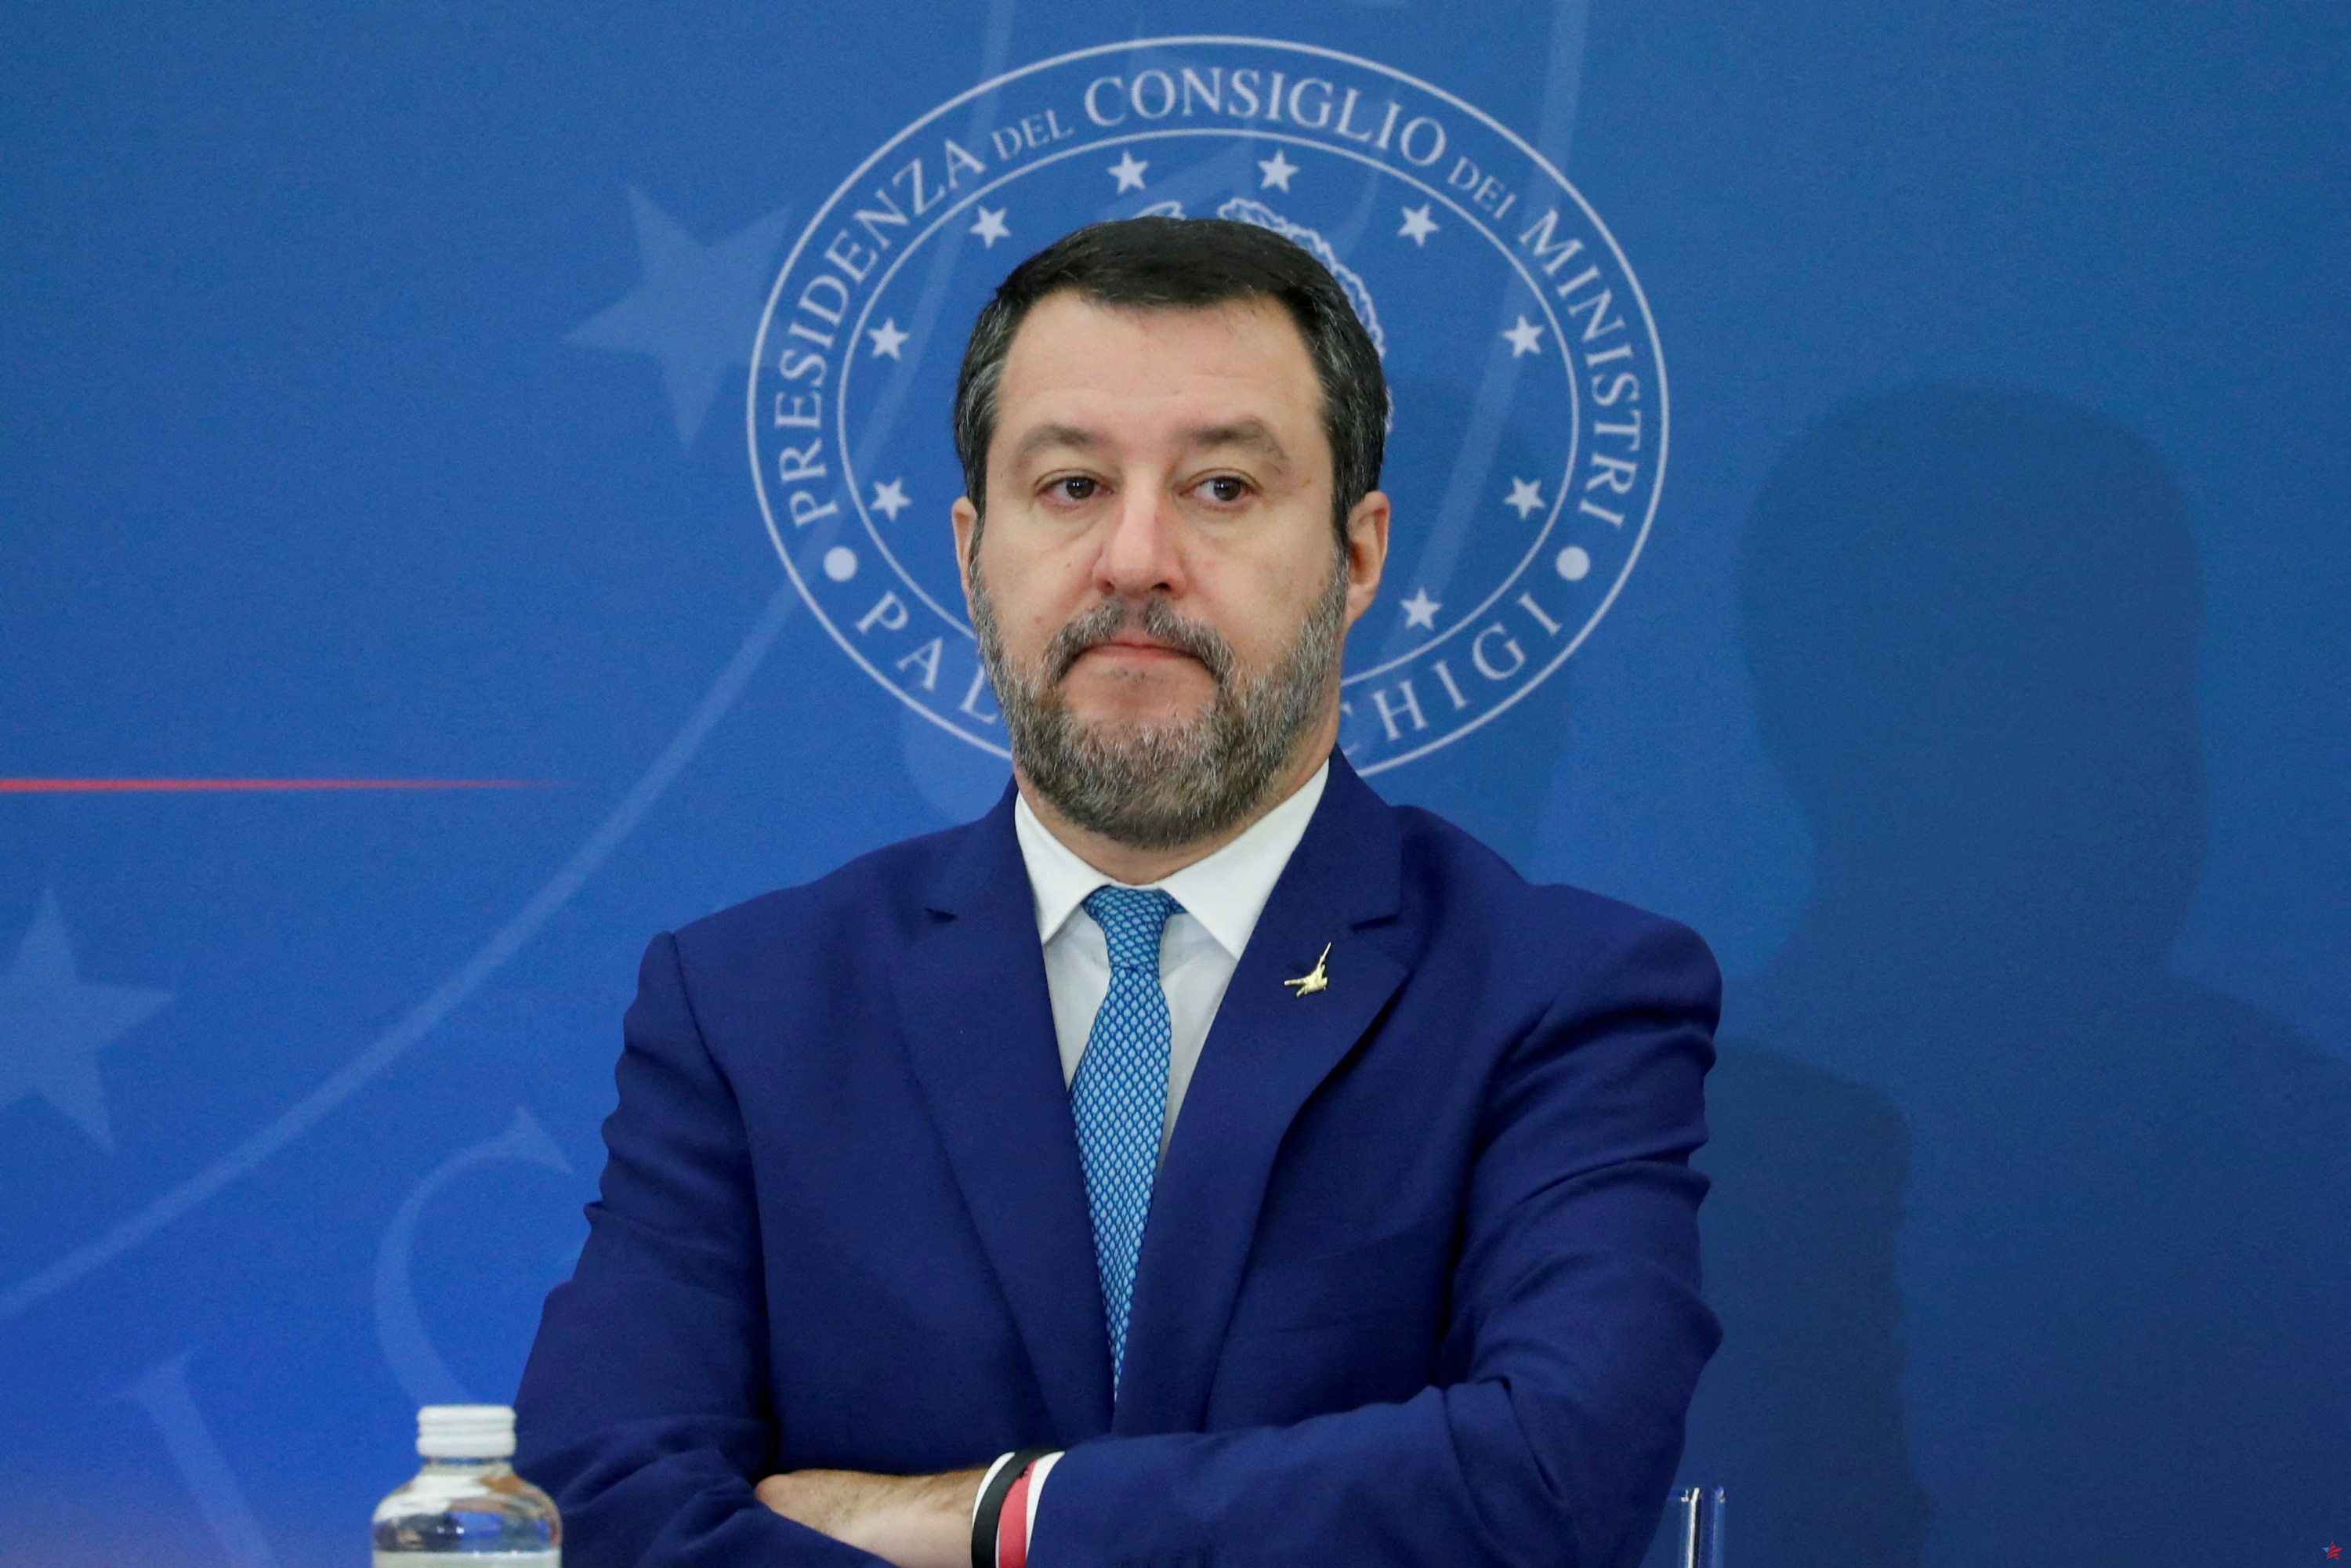 Ucrania: “Las palabras de Emmanuel Macron son un peligro” para Europa, dice Salvini